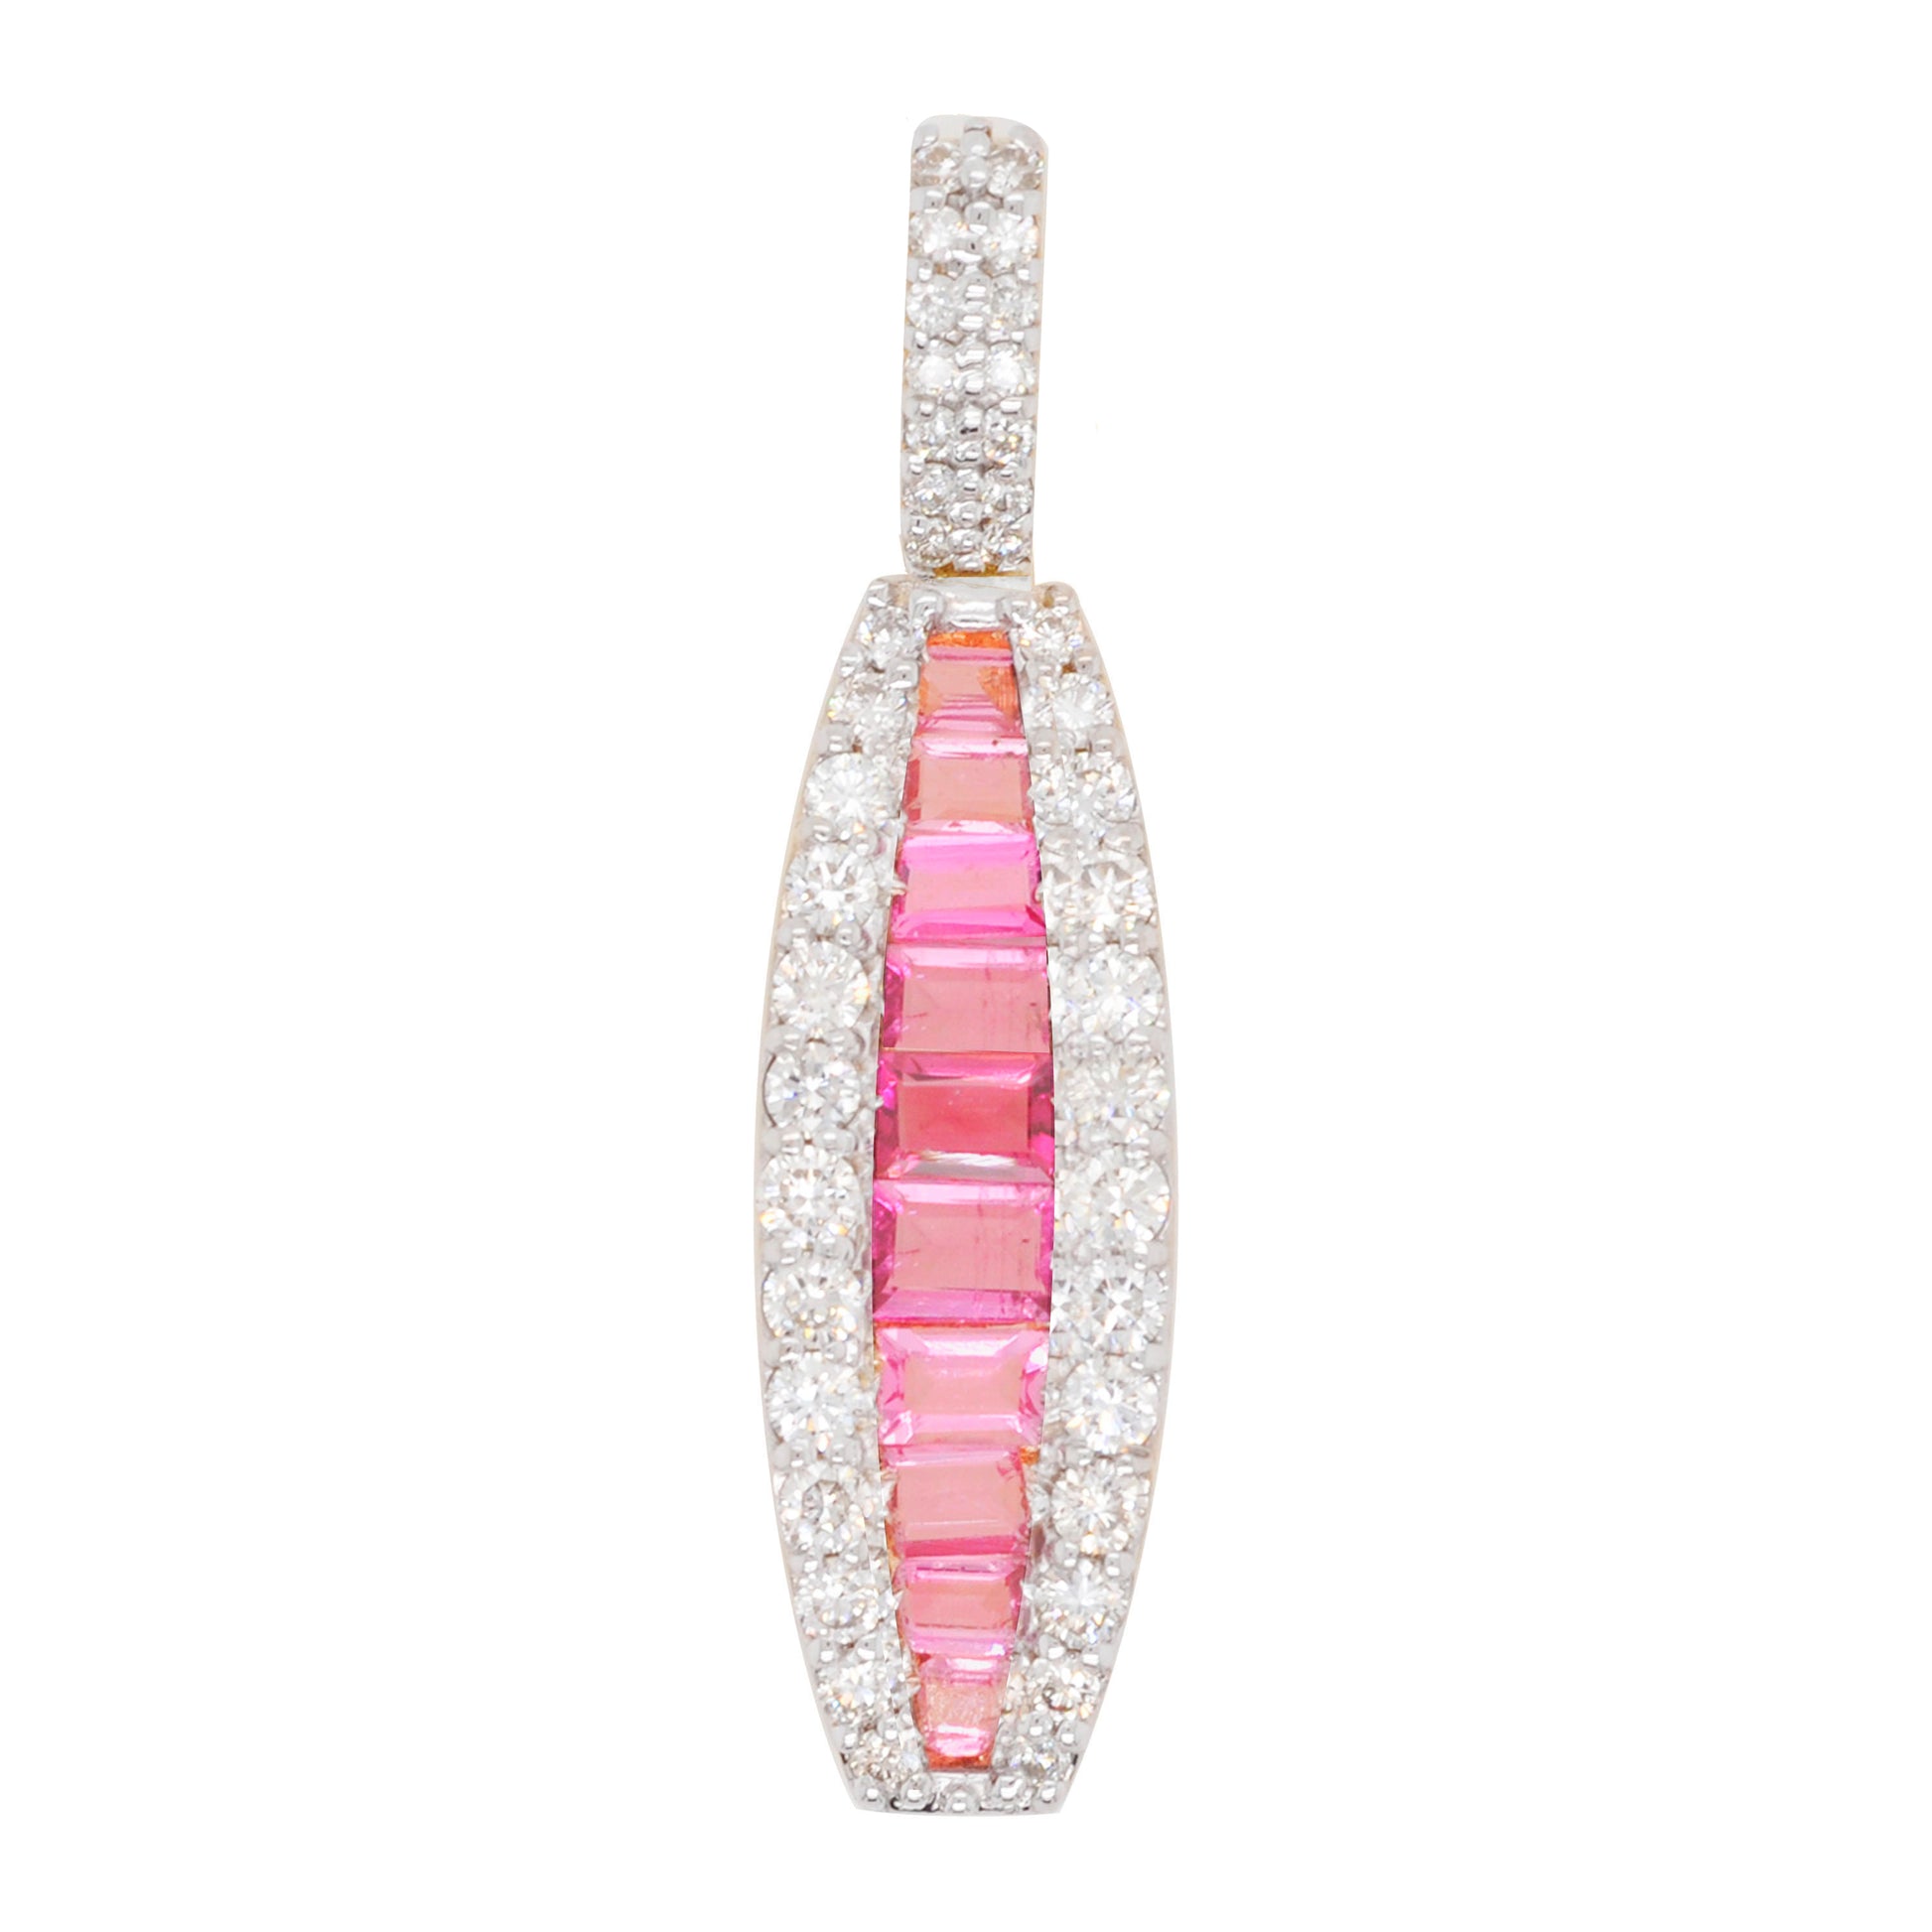 18K Gold Pink Tourmaline Art Deco Diamond Pendant Necklace - Vaibhav Dhadda Jewelry